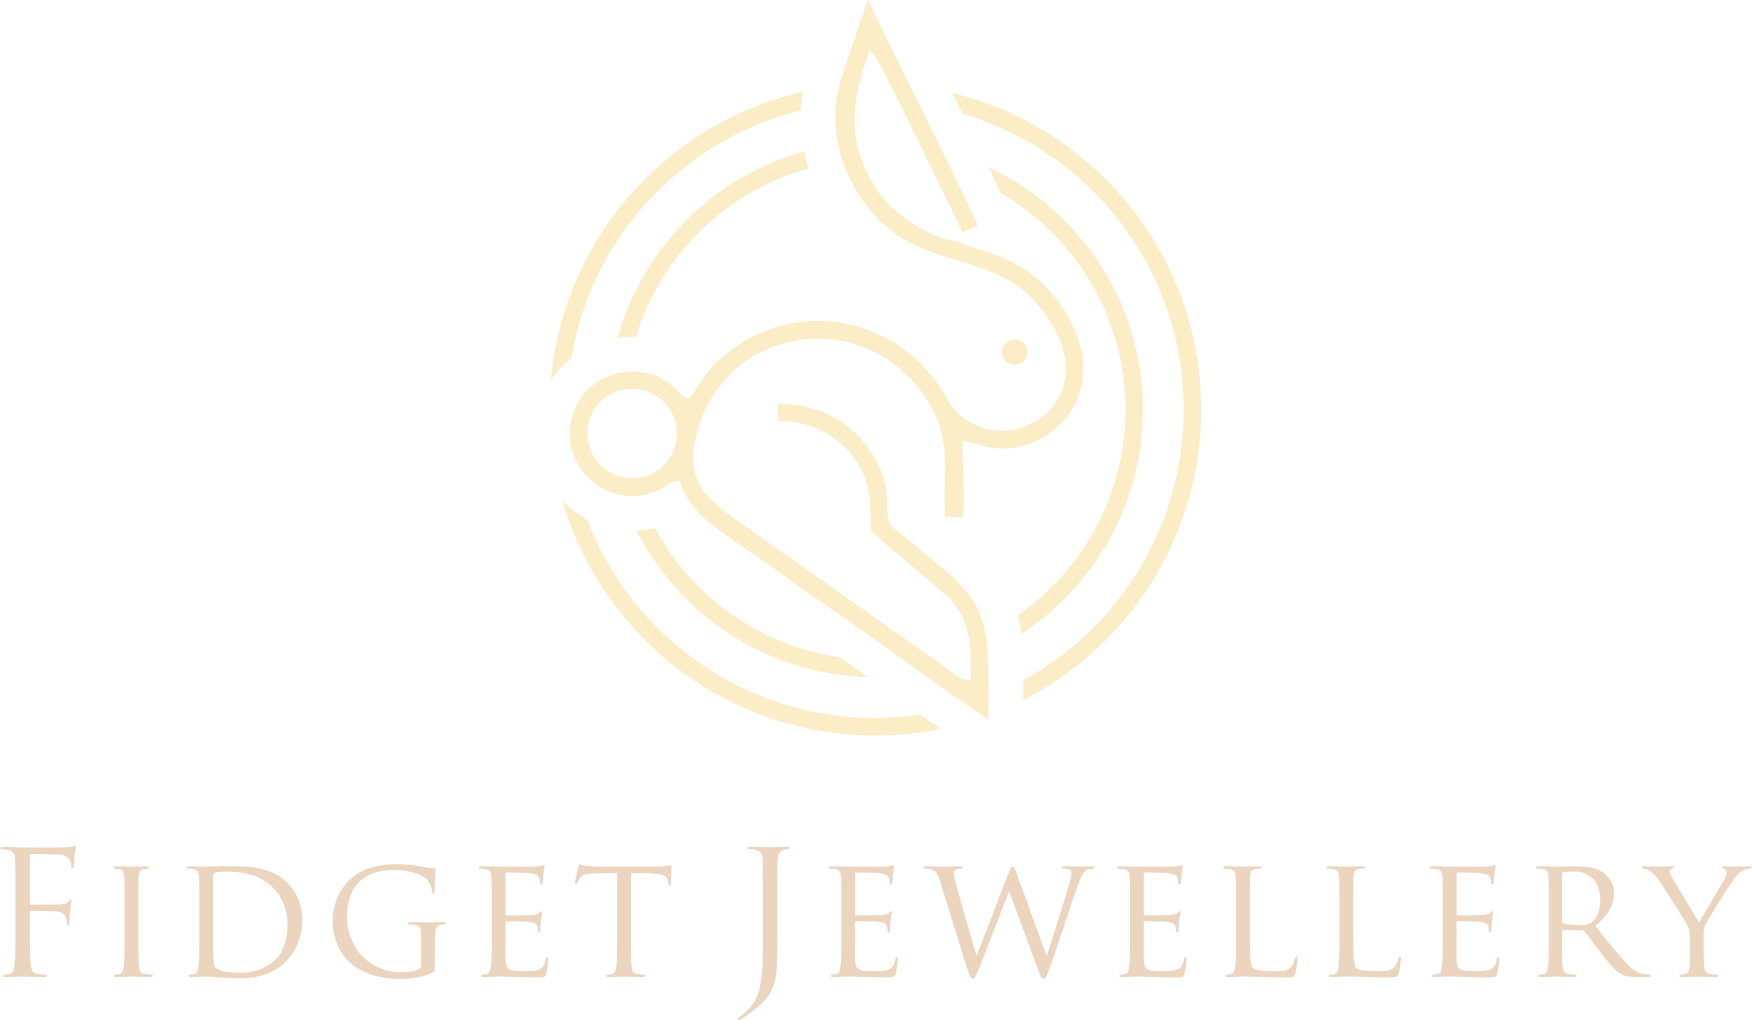 Fidget Jewellery